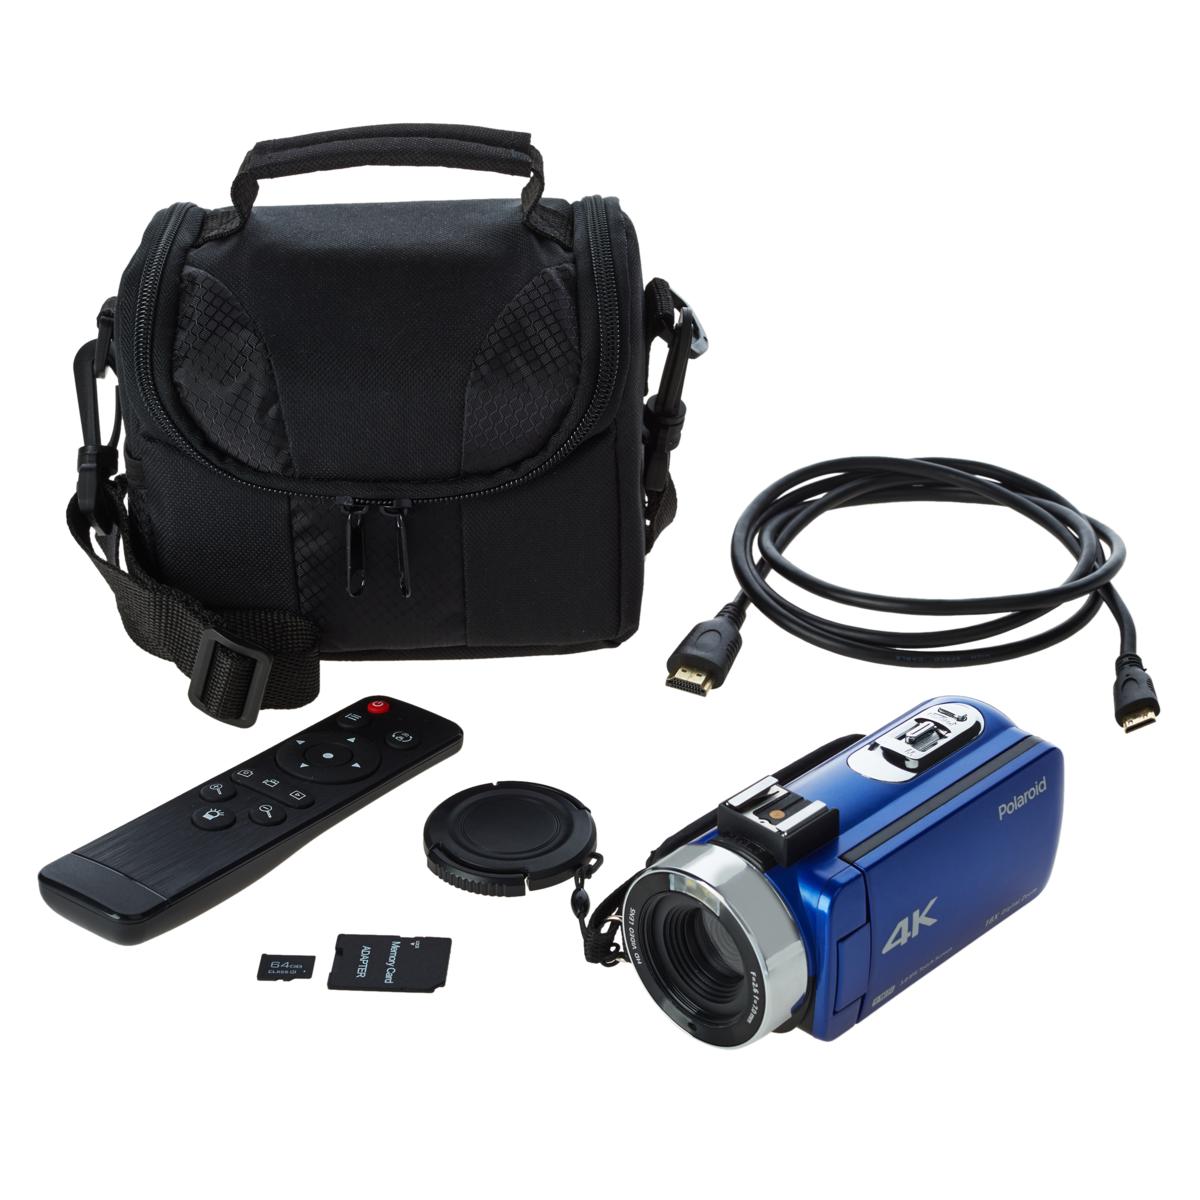 4k-digital-camcorder-id995hd-v1-blue-3